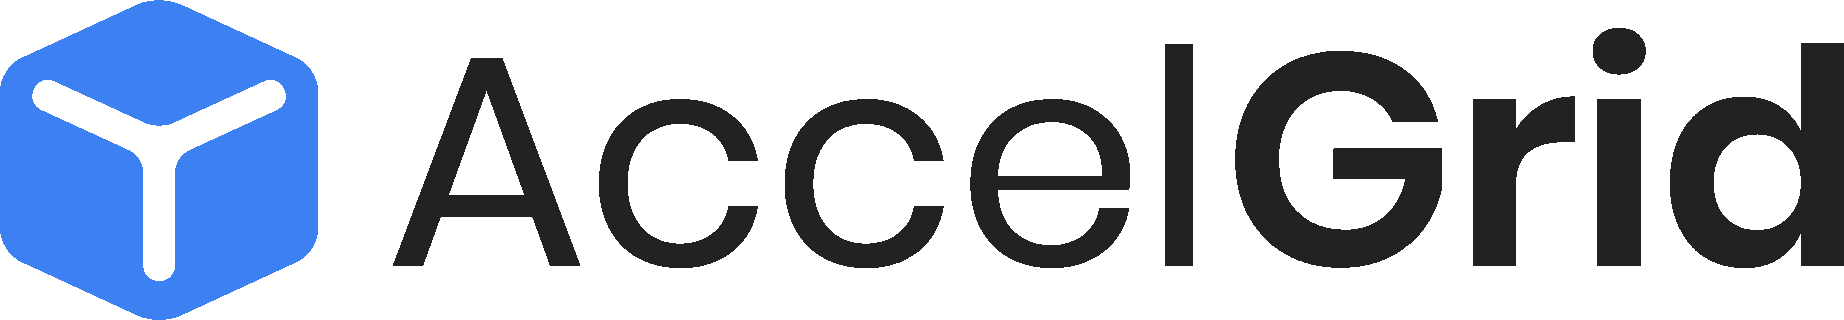 accelgrid logo